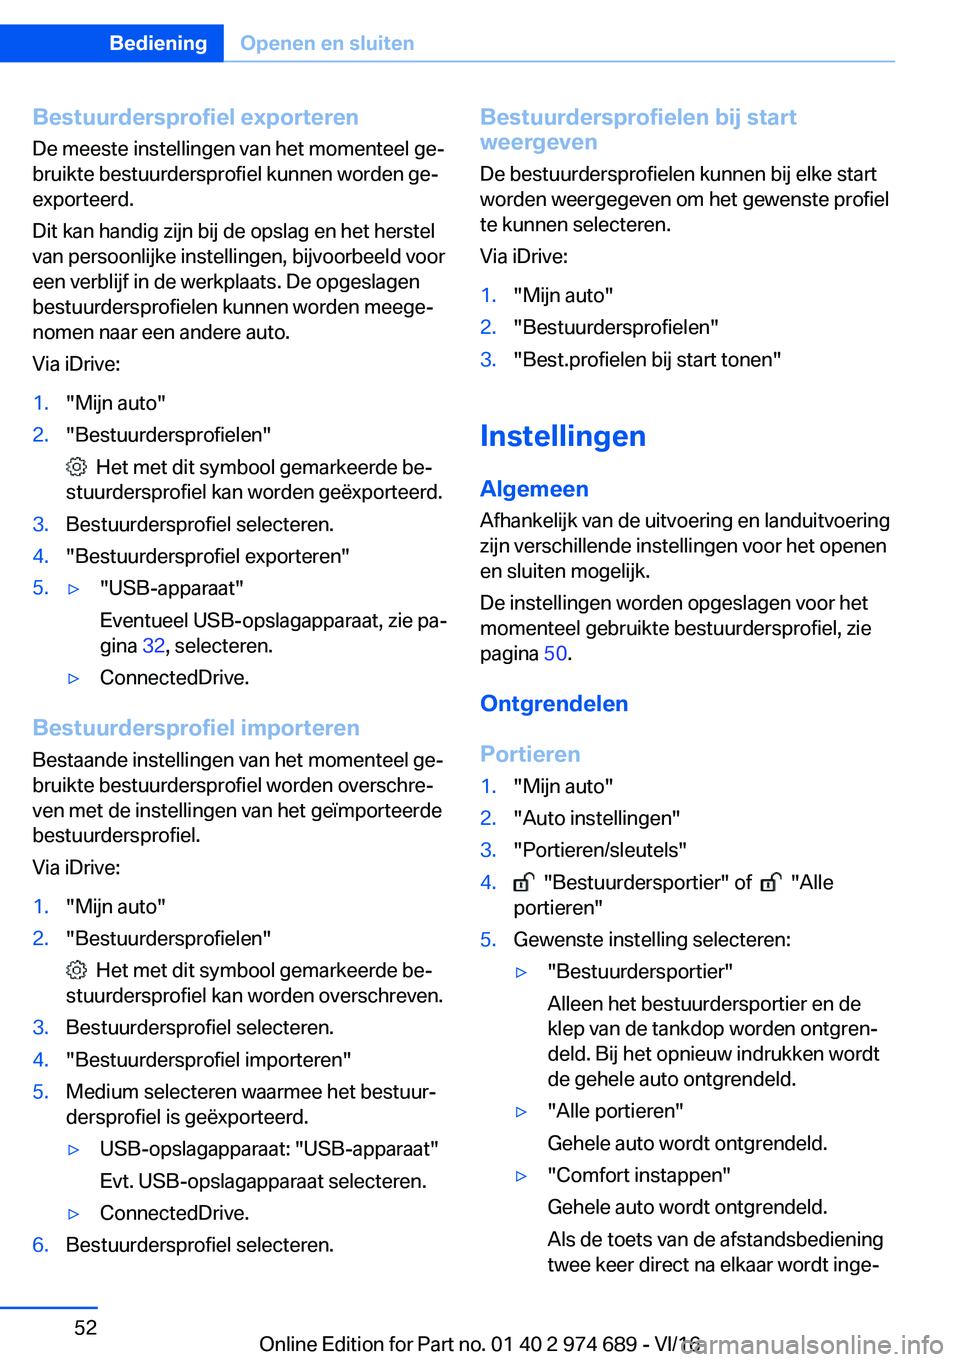 BMW M2 2017  Instructieboekjes (in Dutch) �B�e�s�t�u�u�r�d�e�r�s�p�r�o�f�i�e�l��e�x�p�o�r�t�e�r�e�n
�D�e� �m�e�e�s�t�e� �i�n�s�t�e�l�l�i�n�g�e�n� �v�a�n� �h�e�t� �m�o�m�e�n�t�e�e�l� �g�ej �b�r�u�i�k�t�e� �b�e�s�t�u�u�r�d�e�r�s�p�r�o�f�i�e�l